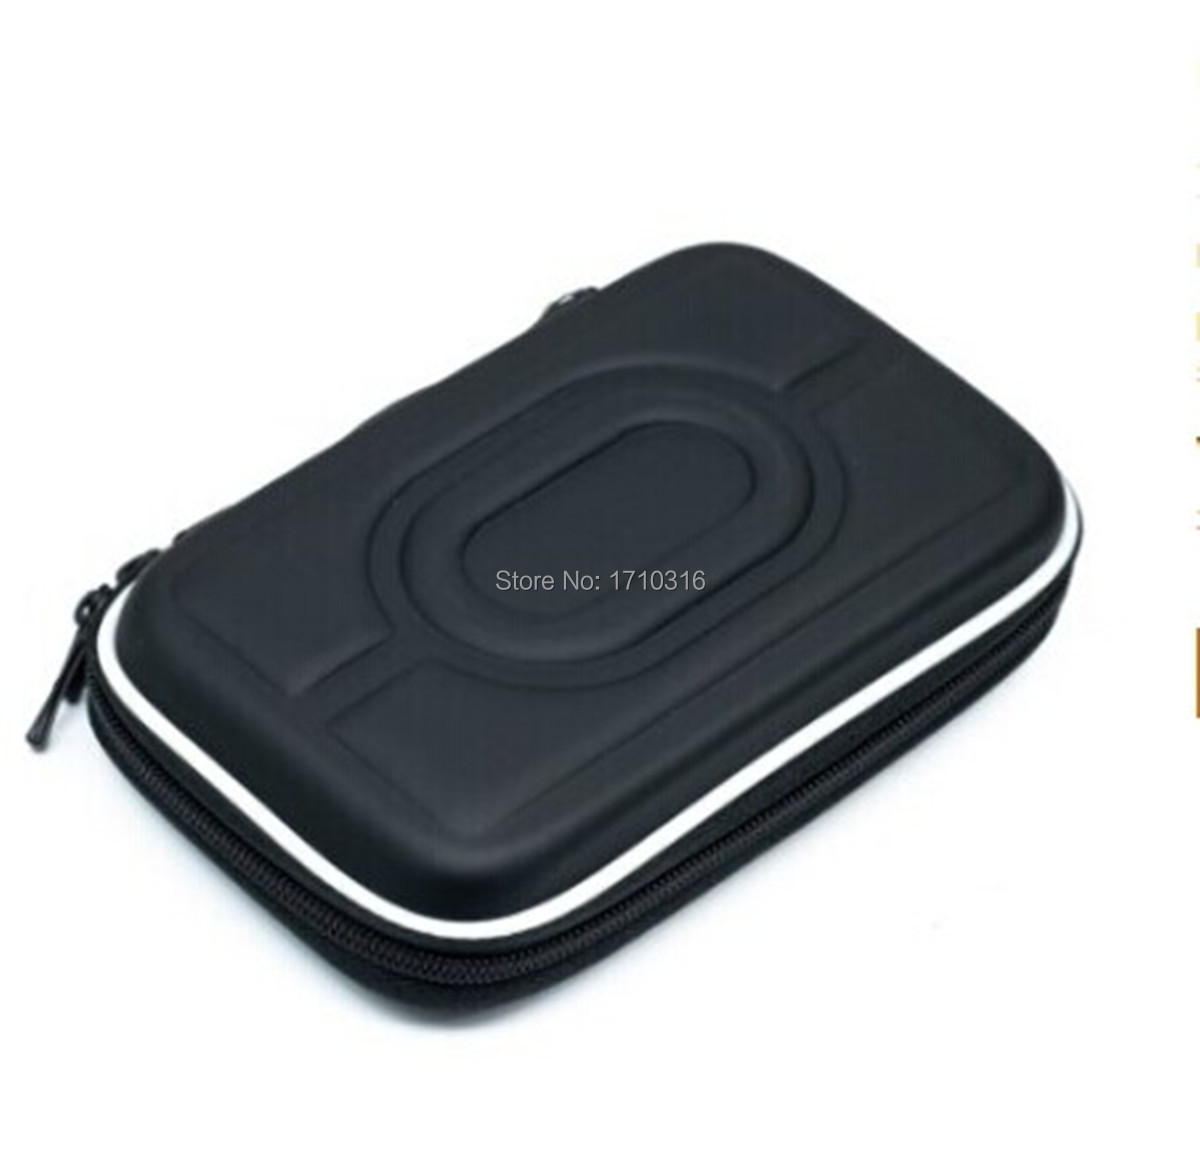 Hot Shockproof Waterproof Shockproof HDD Case Bag Cover Protector Black For 2 5 Inch Hard Disk